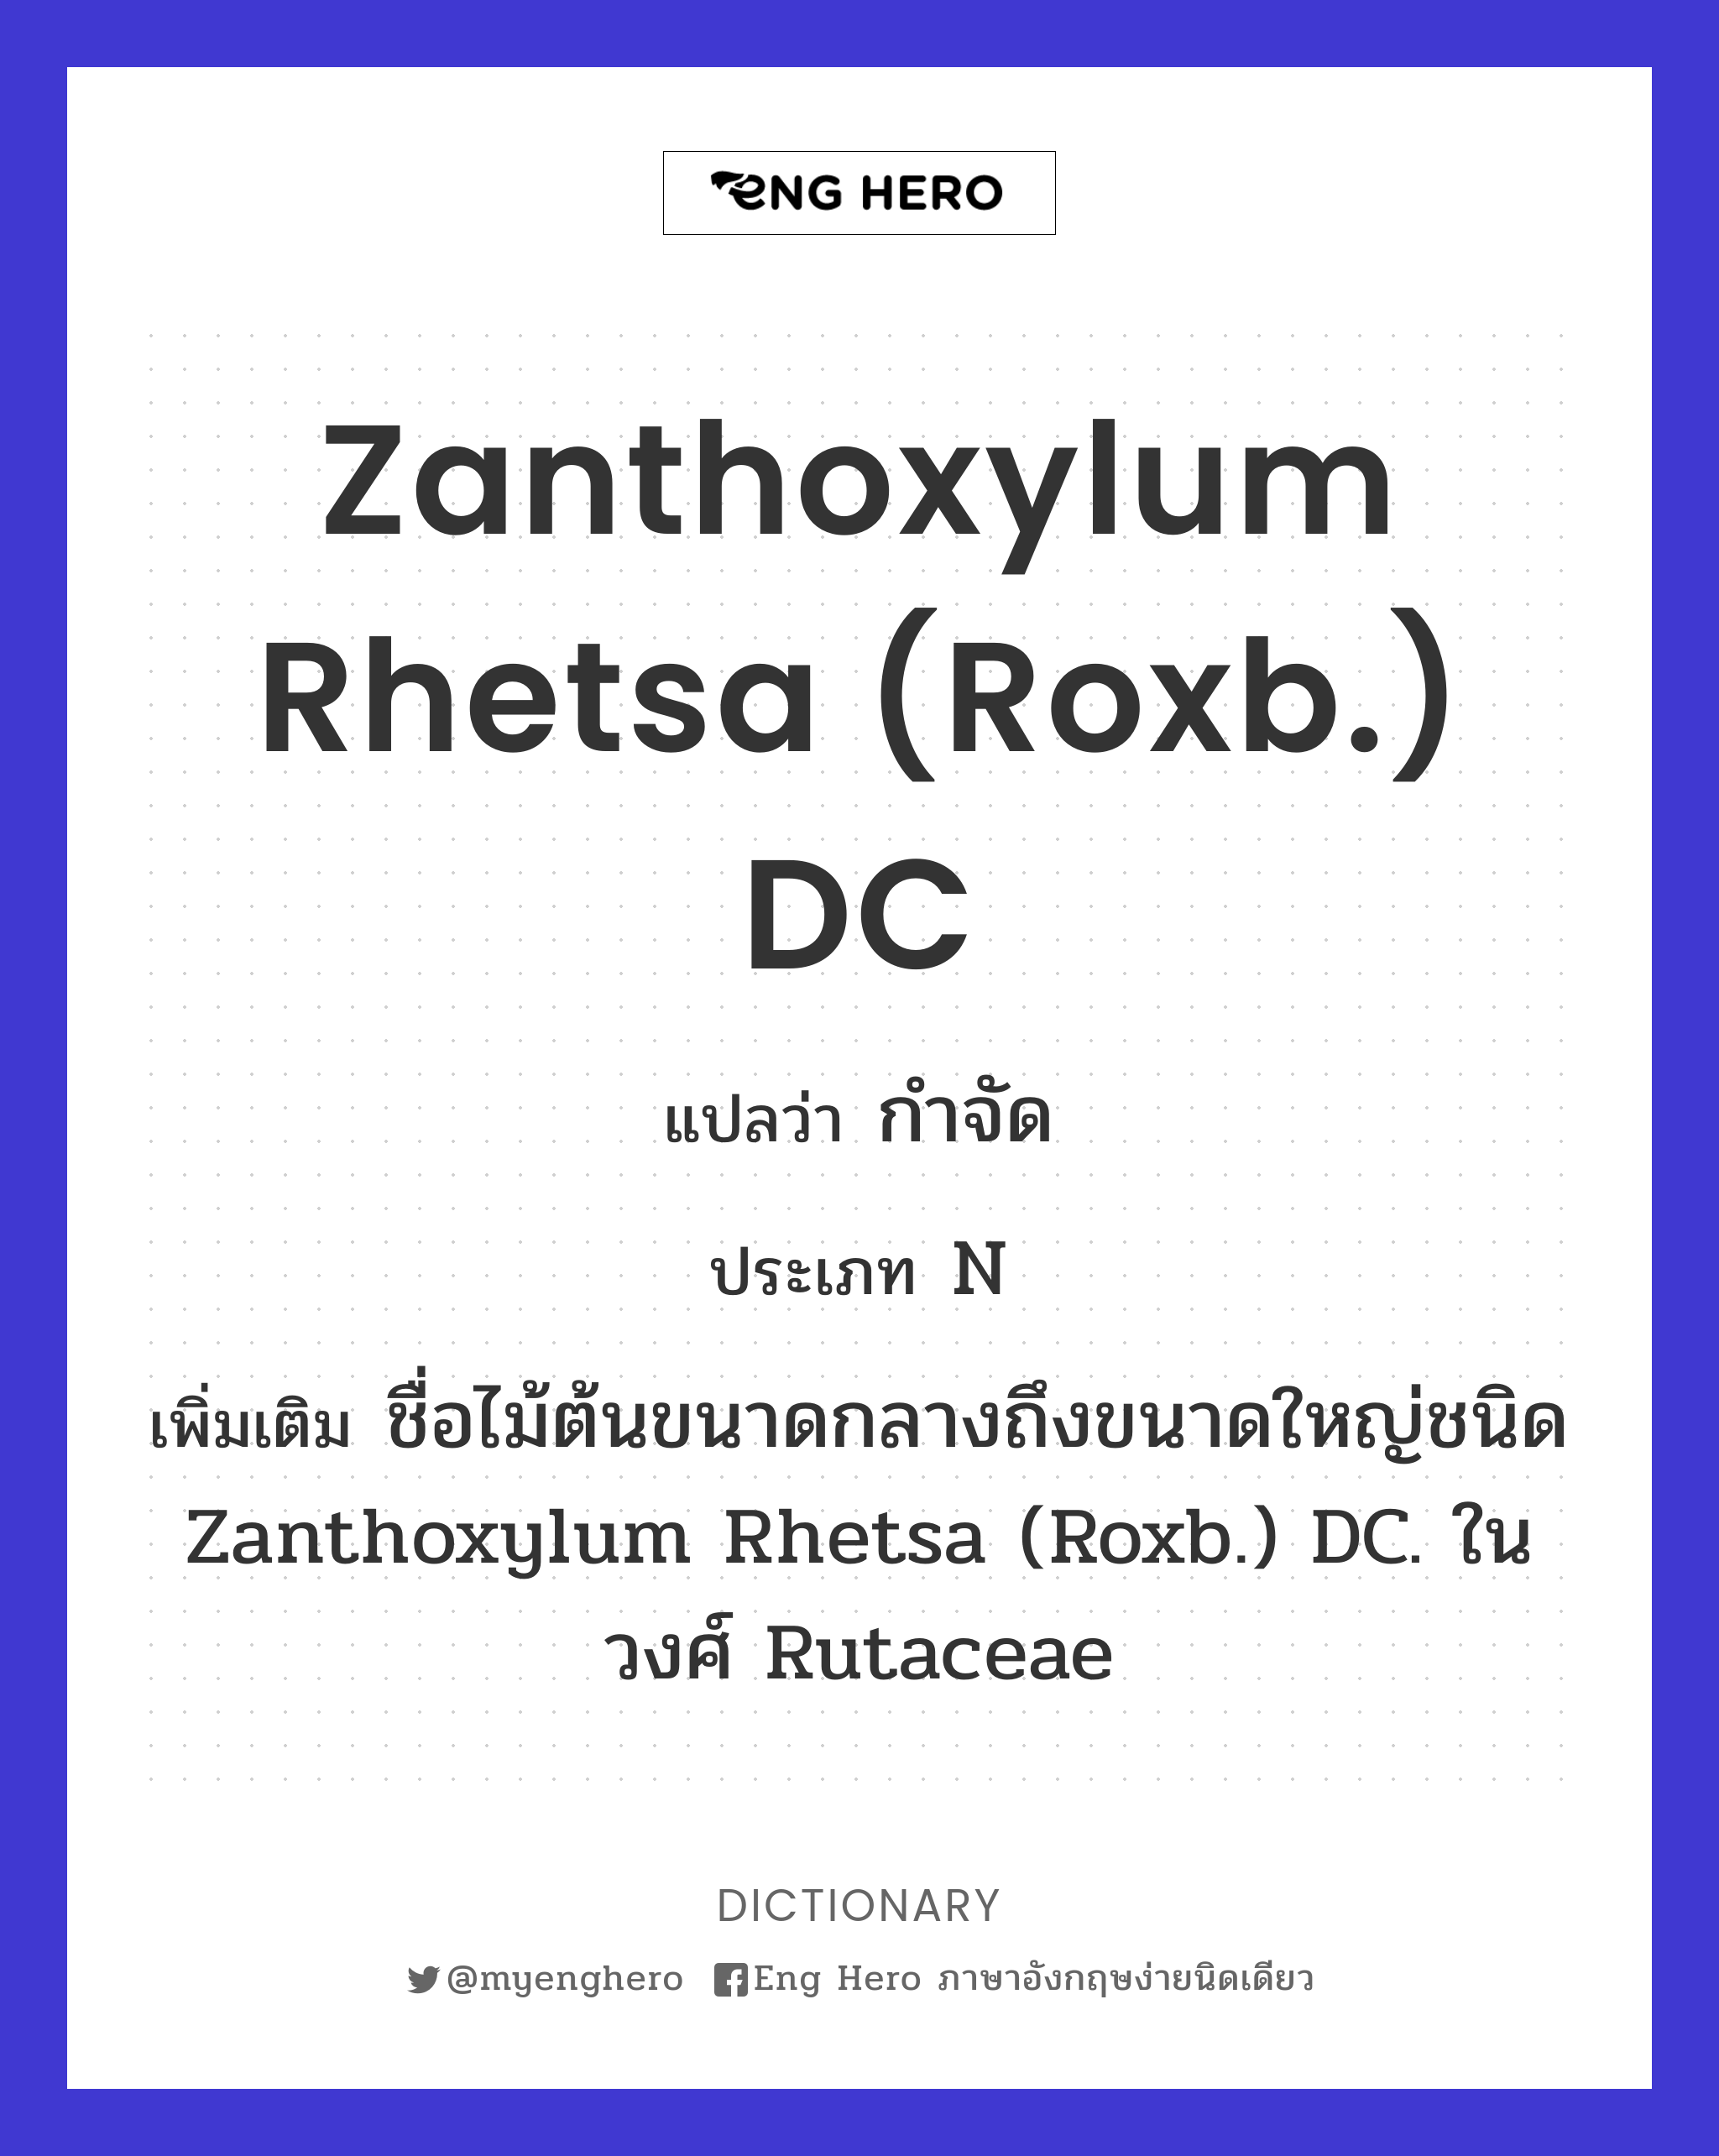 Zanthoxylum rhetsa (Roxb.) DC